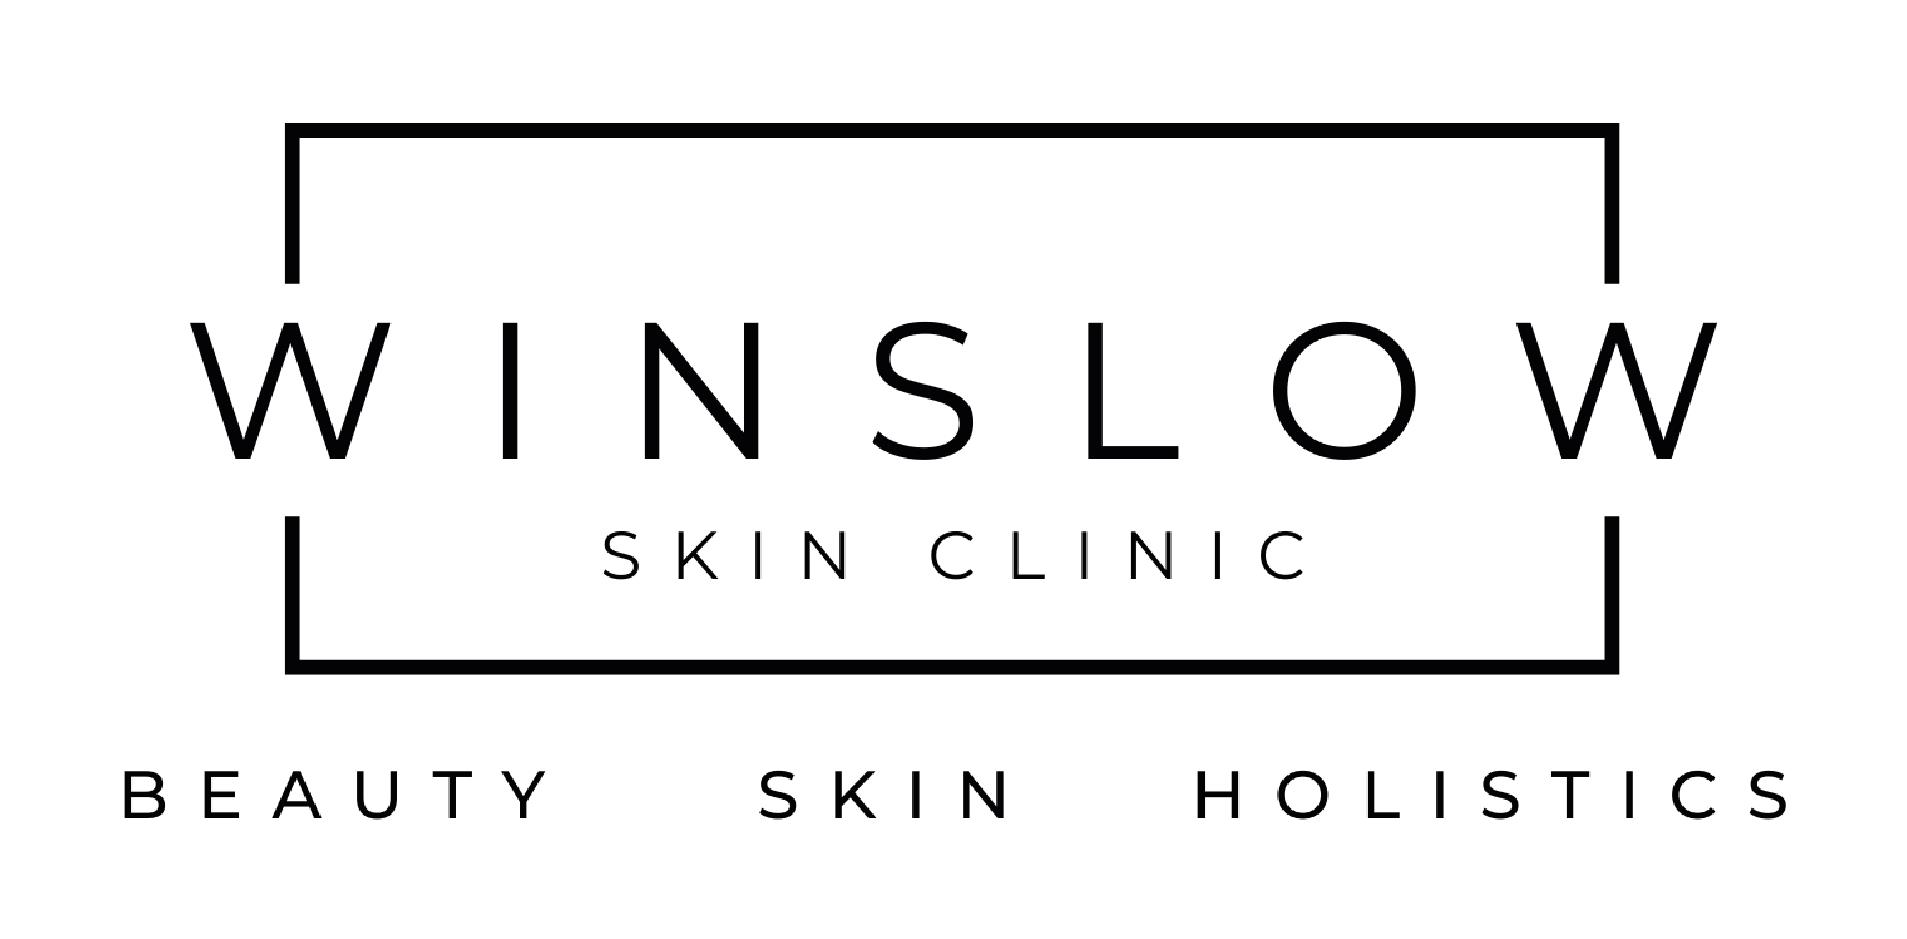 Winslow Skincare